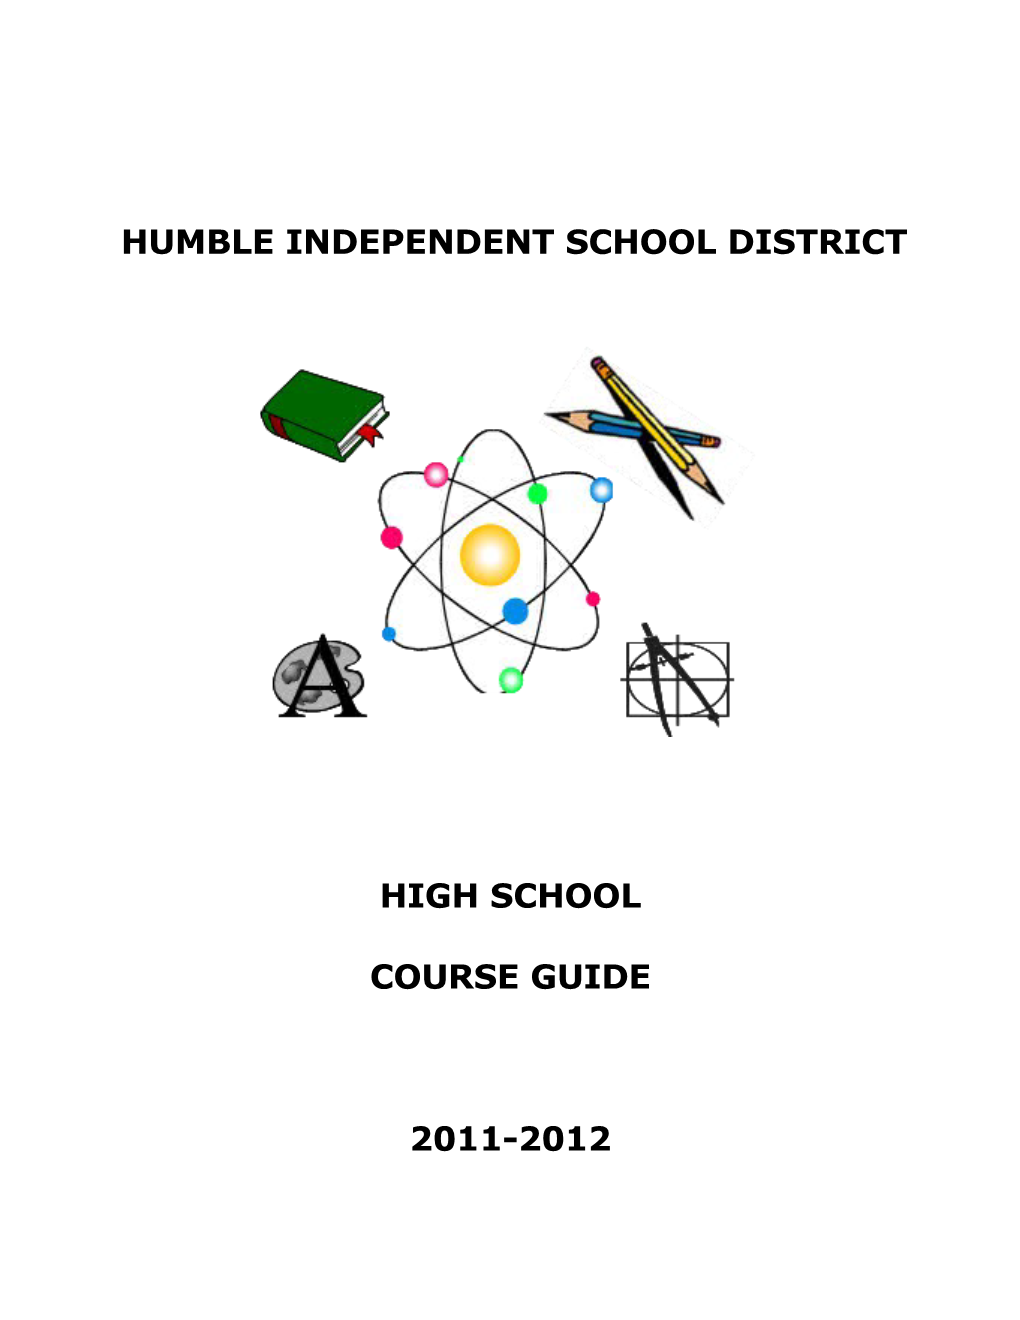 High School Planning Guide, Grades 9-12